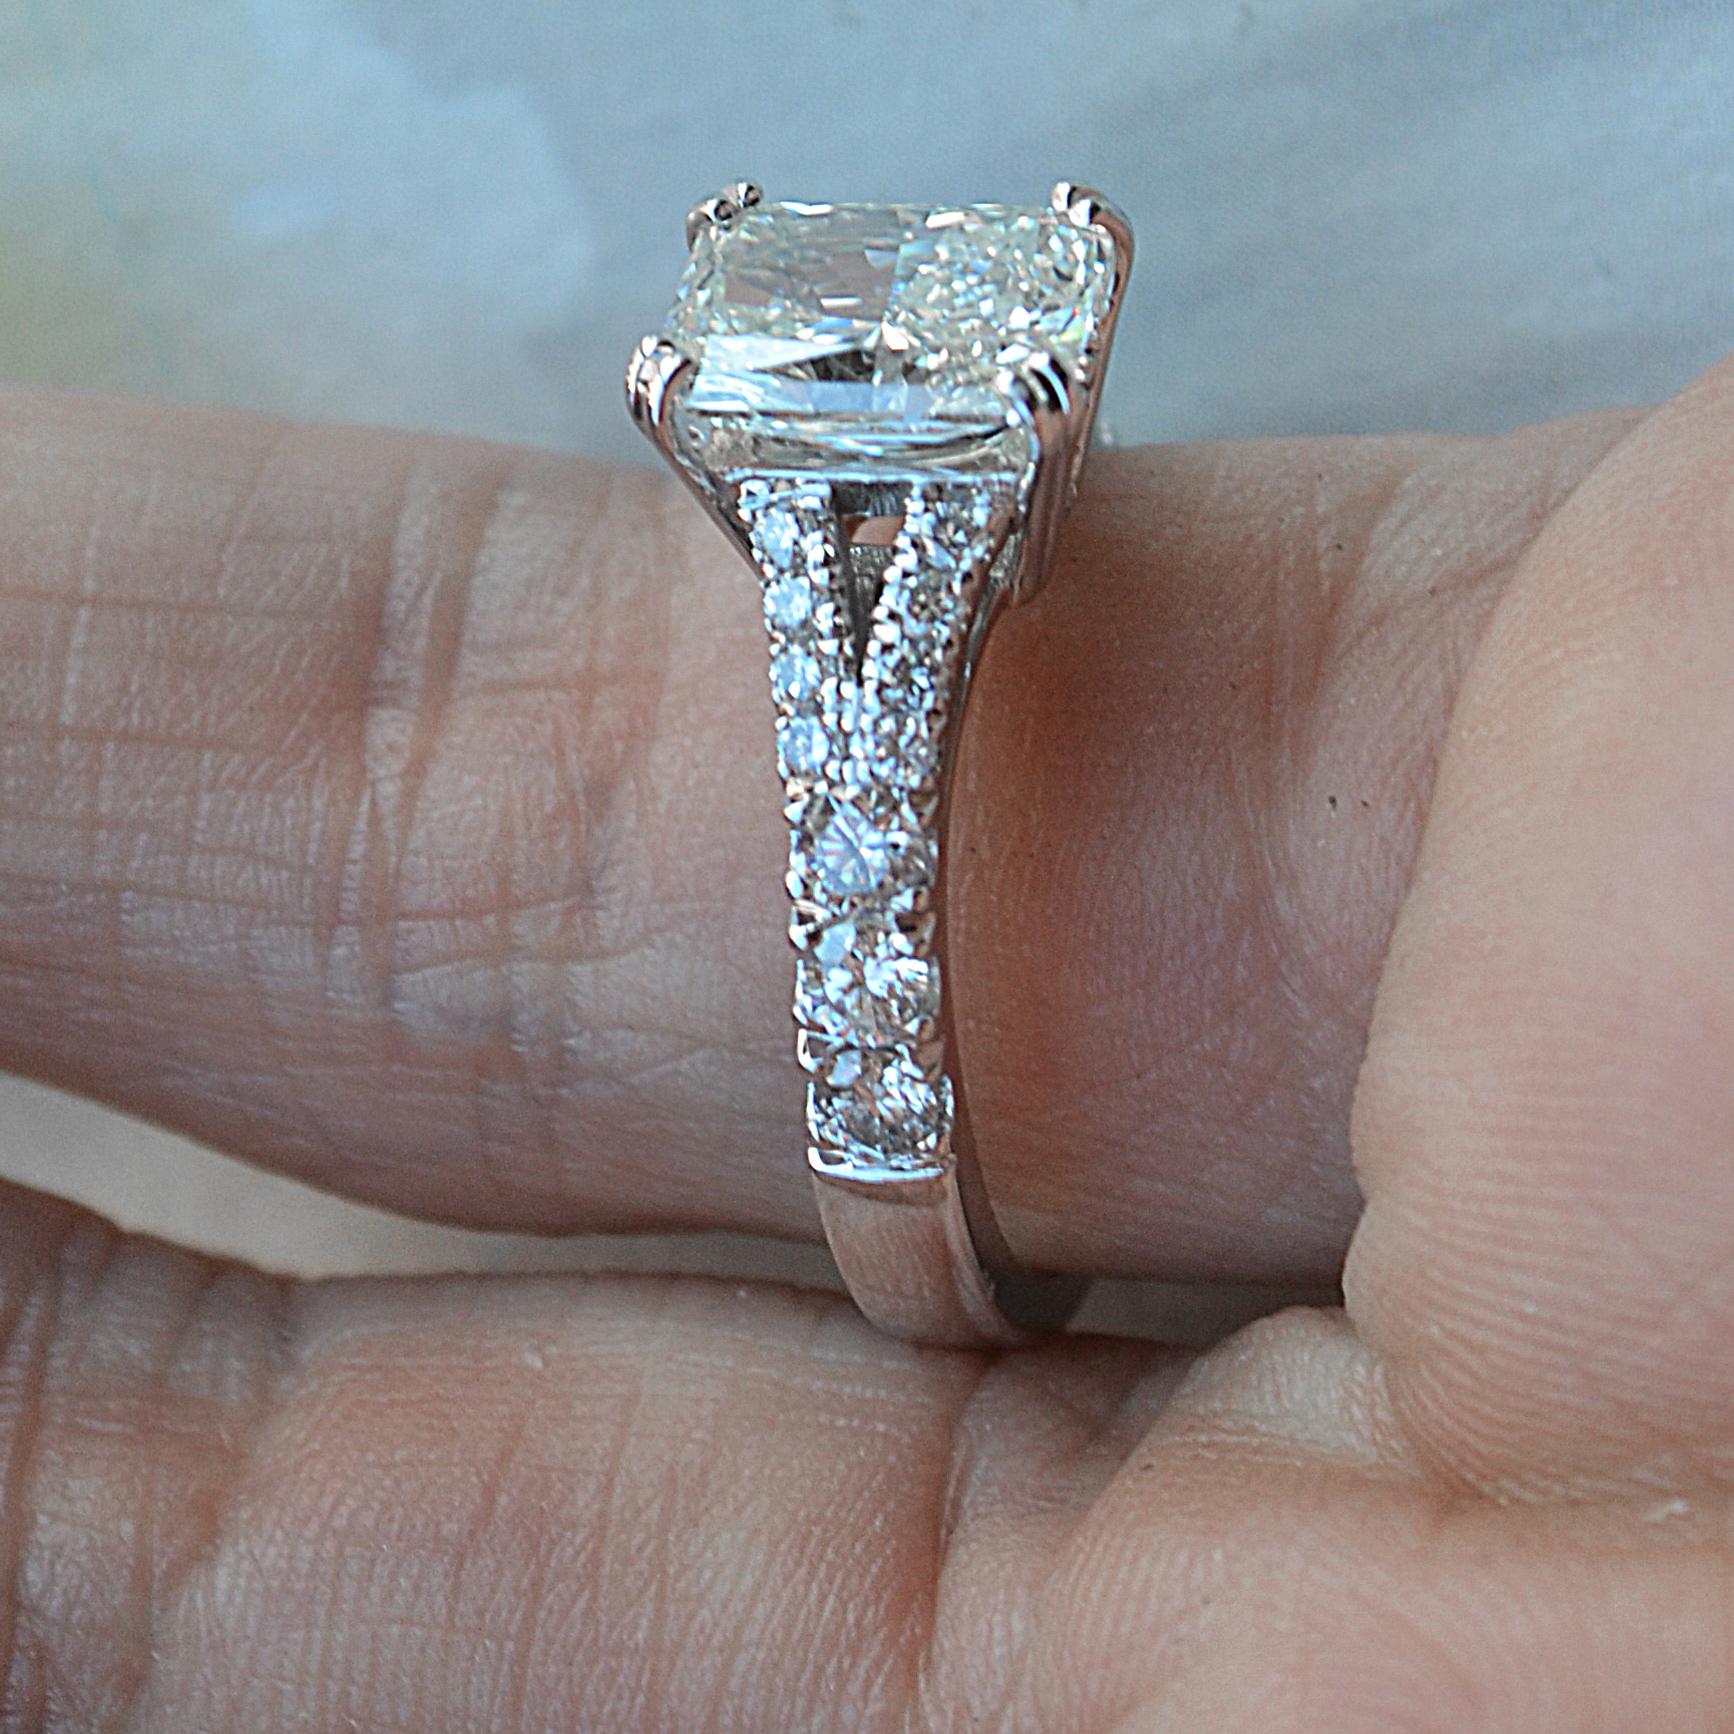 1.5 carat radiant cut diamond